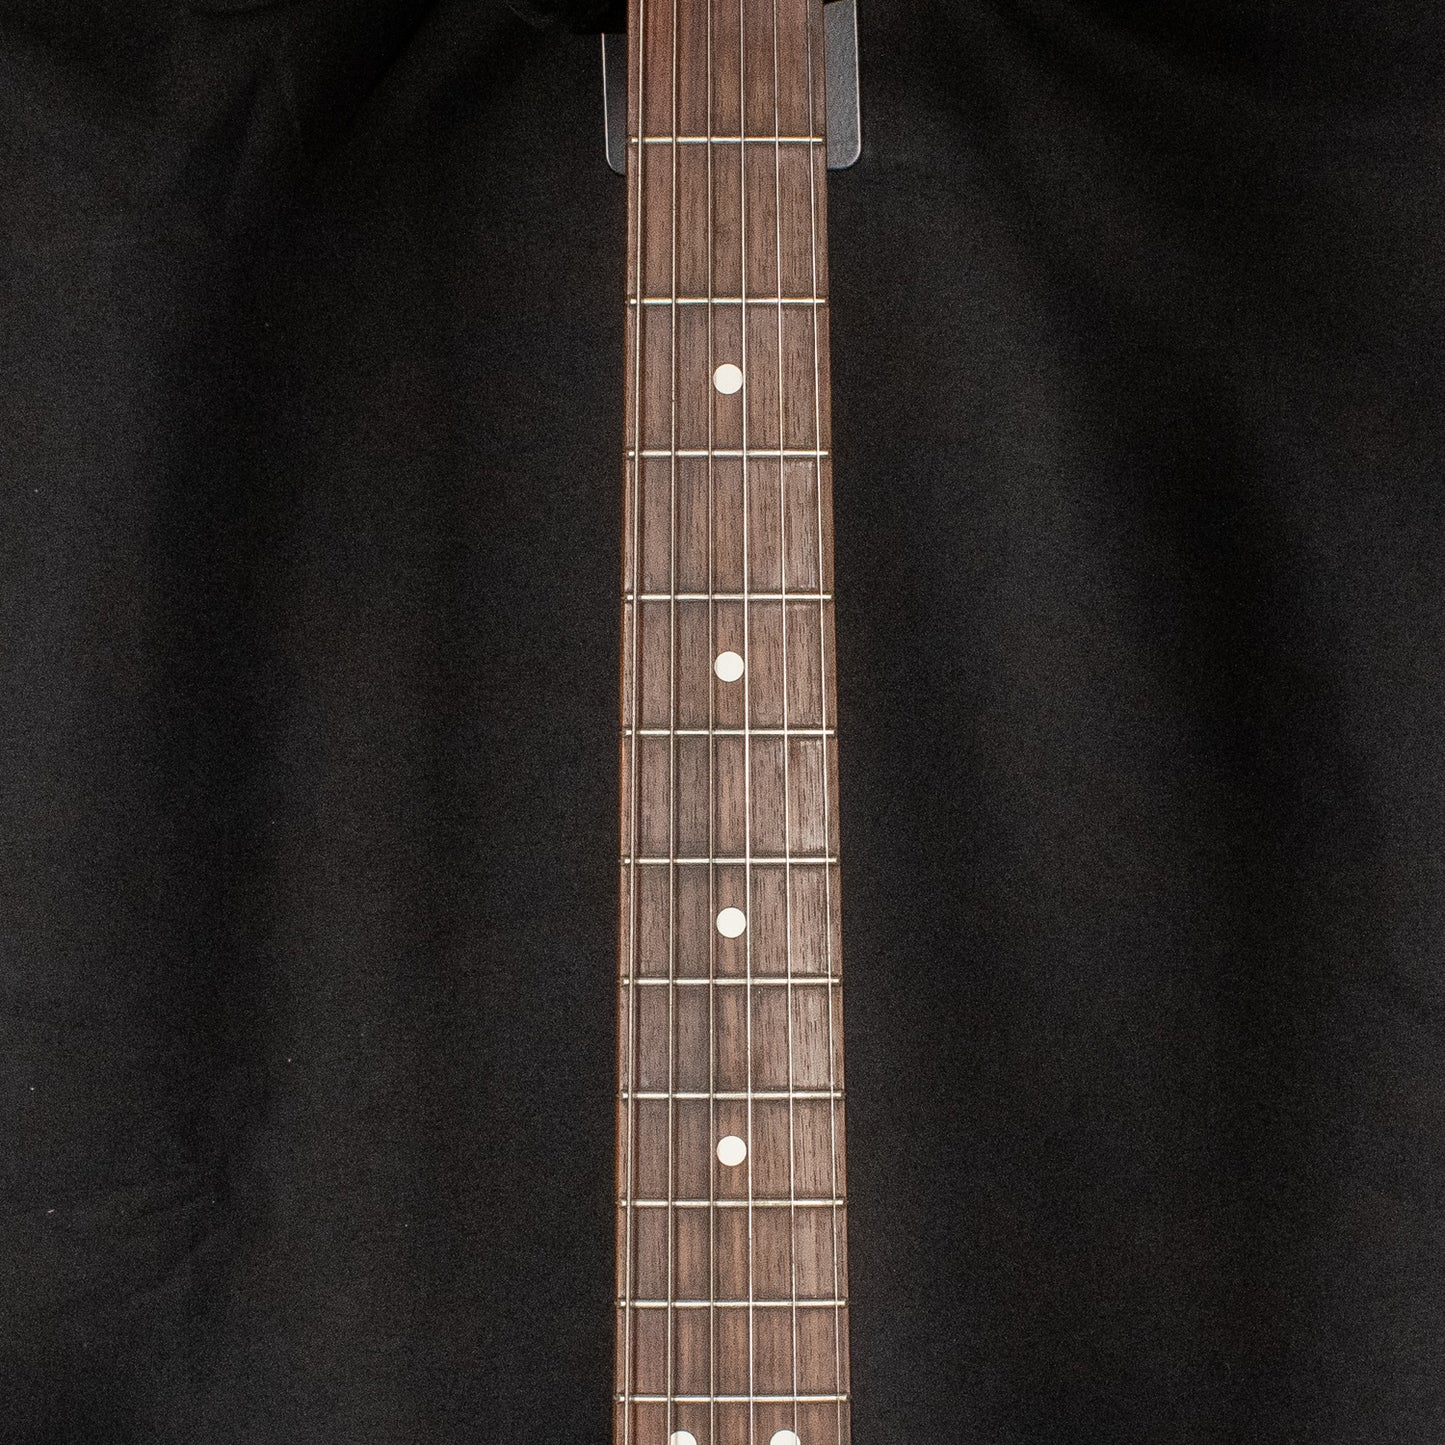 1994 Fender 30th Anniversary Stratocaster